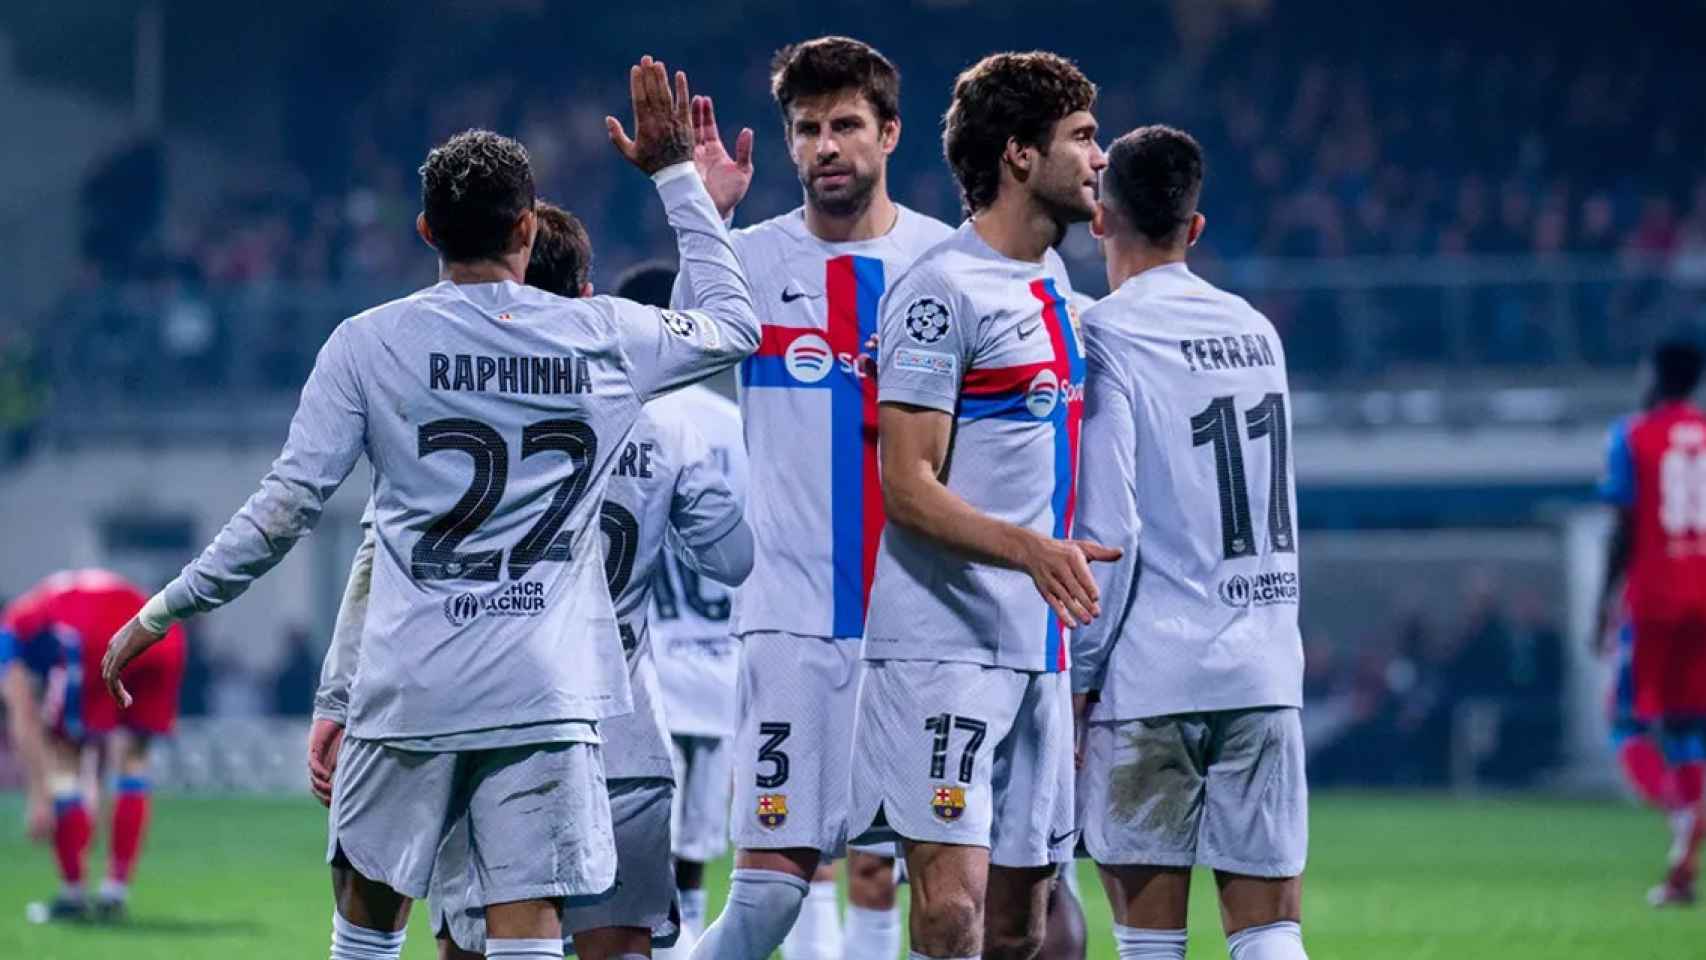 El Barça de Xavi se agrupa para celebrar un gol anotado en la Champions League FCB